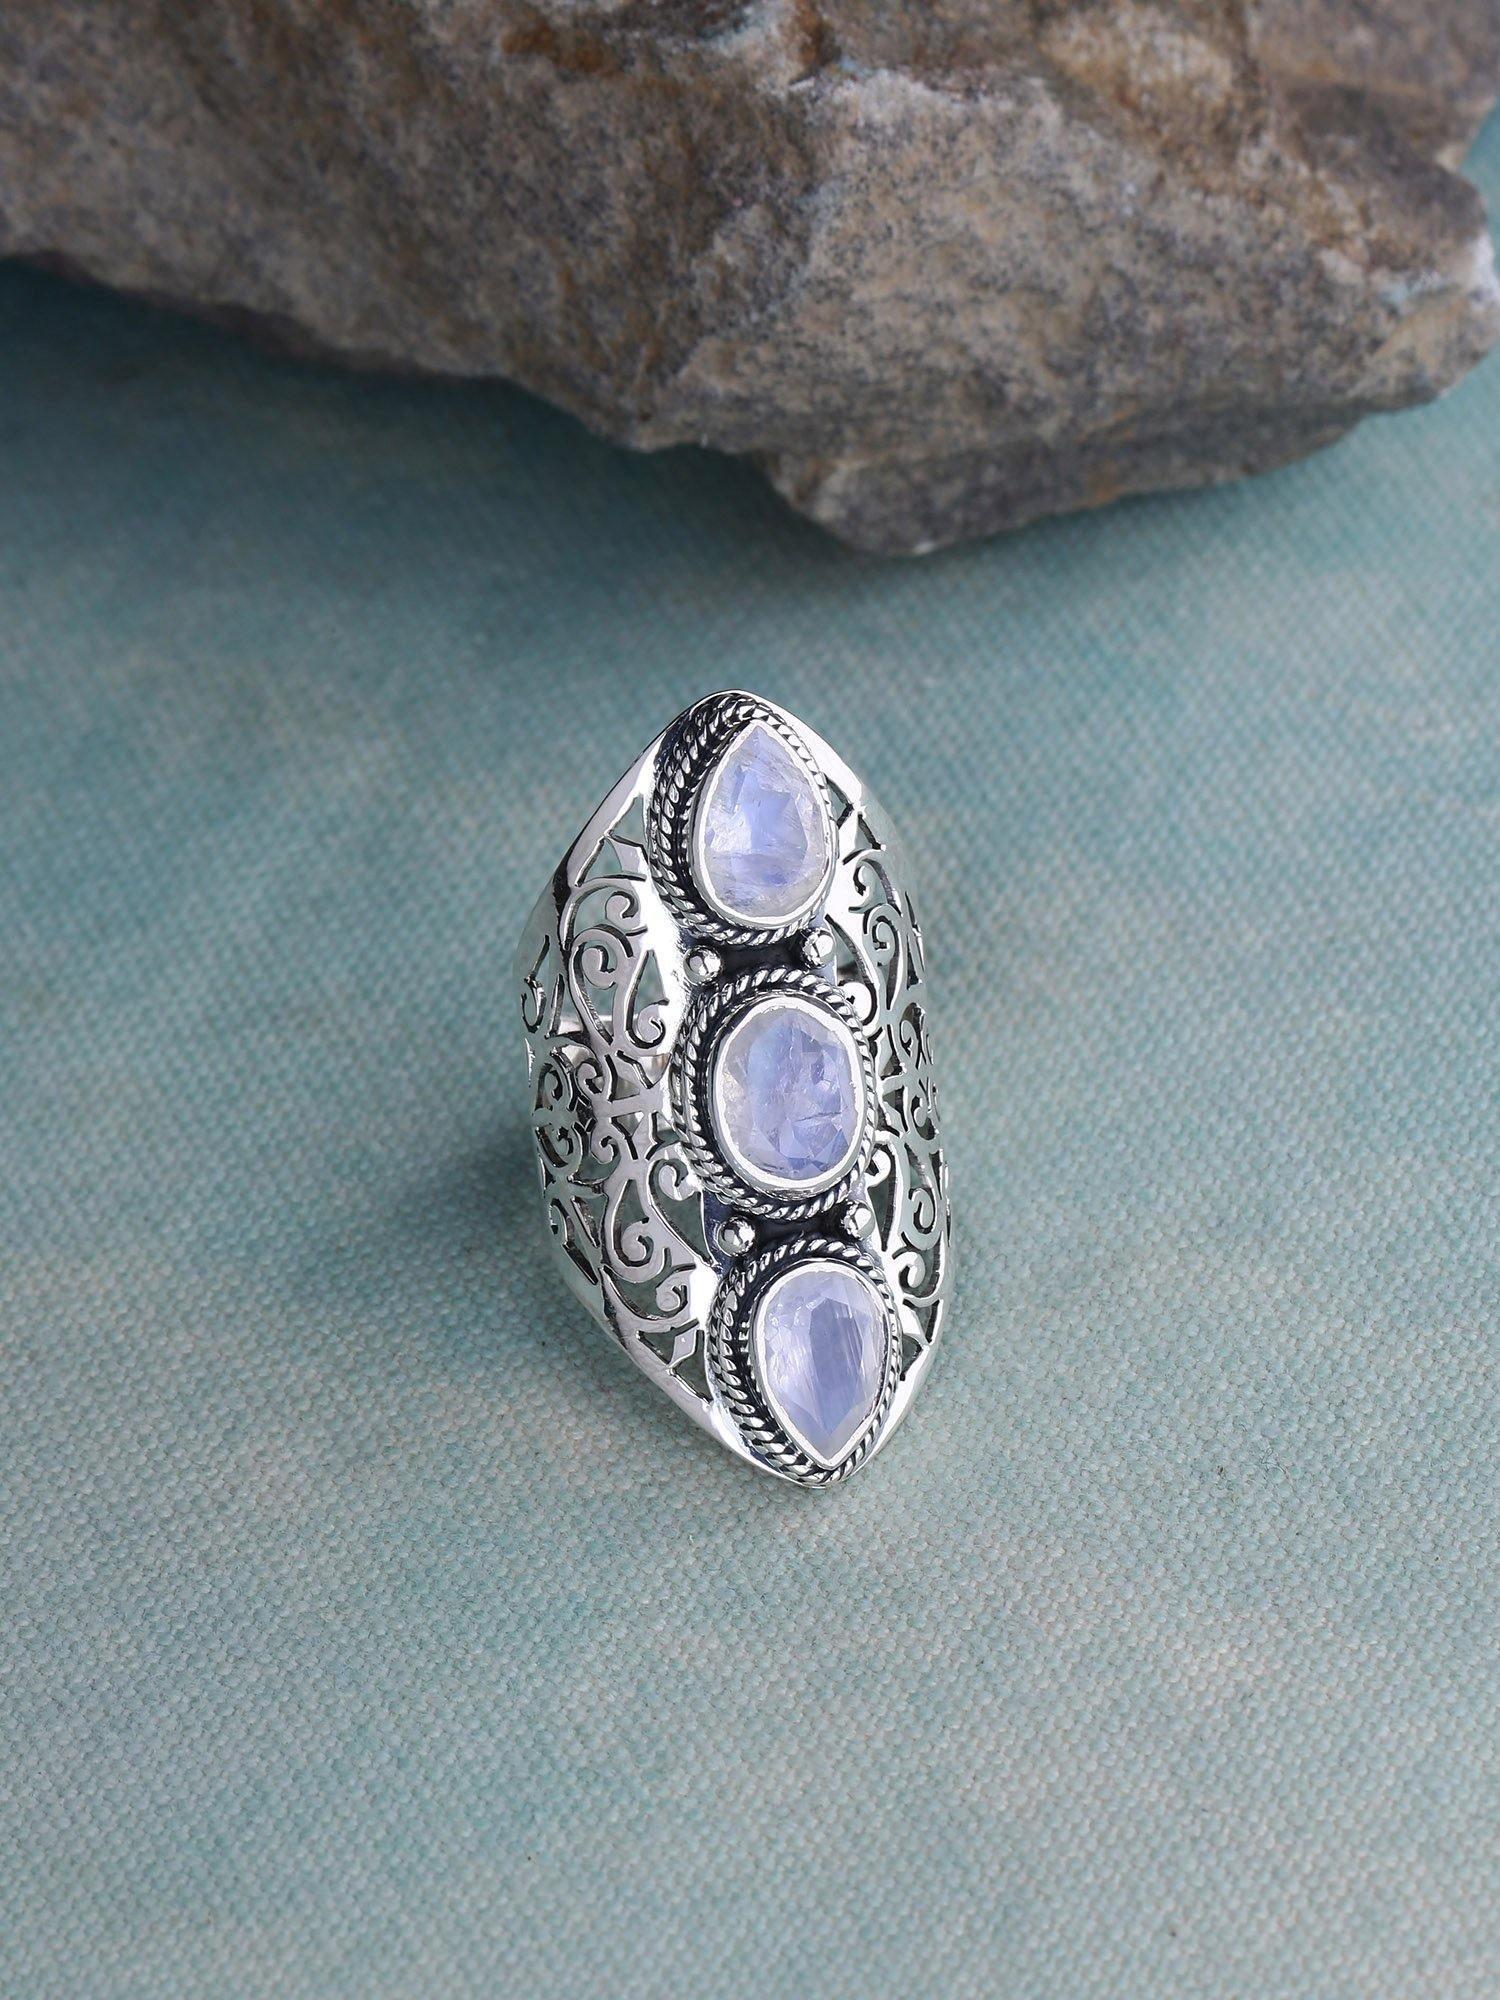 Moonstone Solid 925 Sterling Silver Filigree 3 Stone Ring Jewelry - YoTreasure